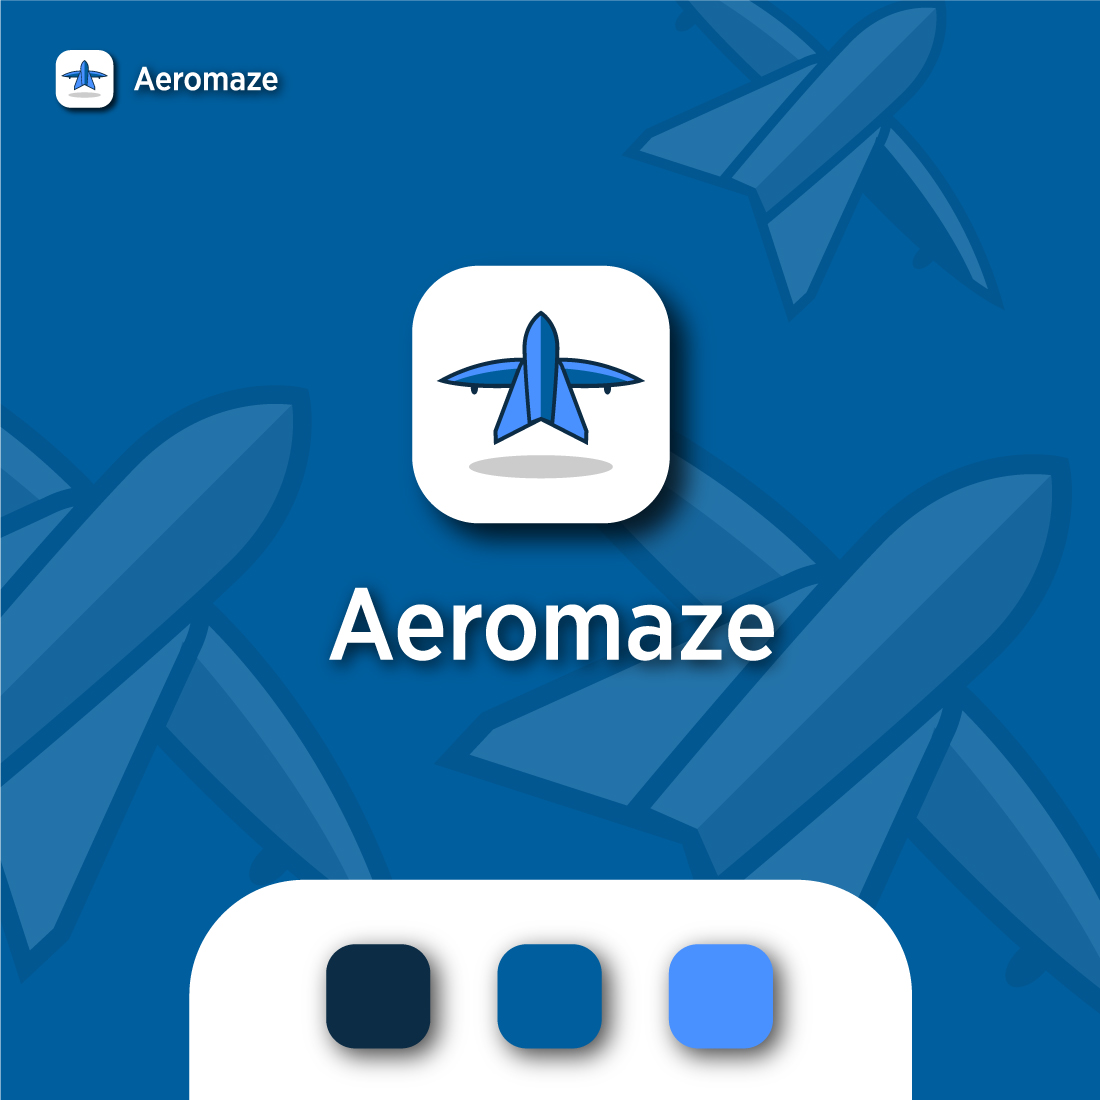 Aeromaze Logo design, creative, minimal, colorful preview image.